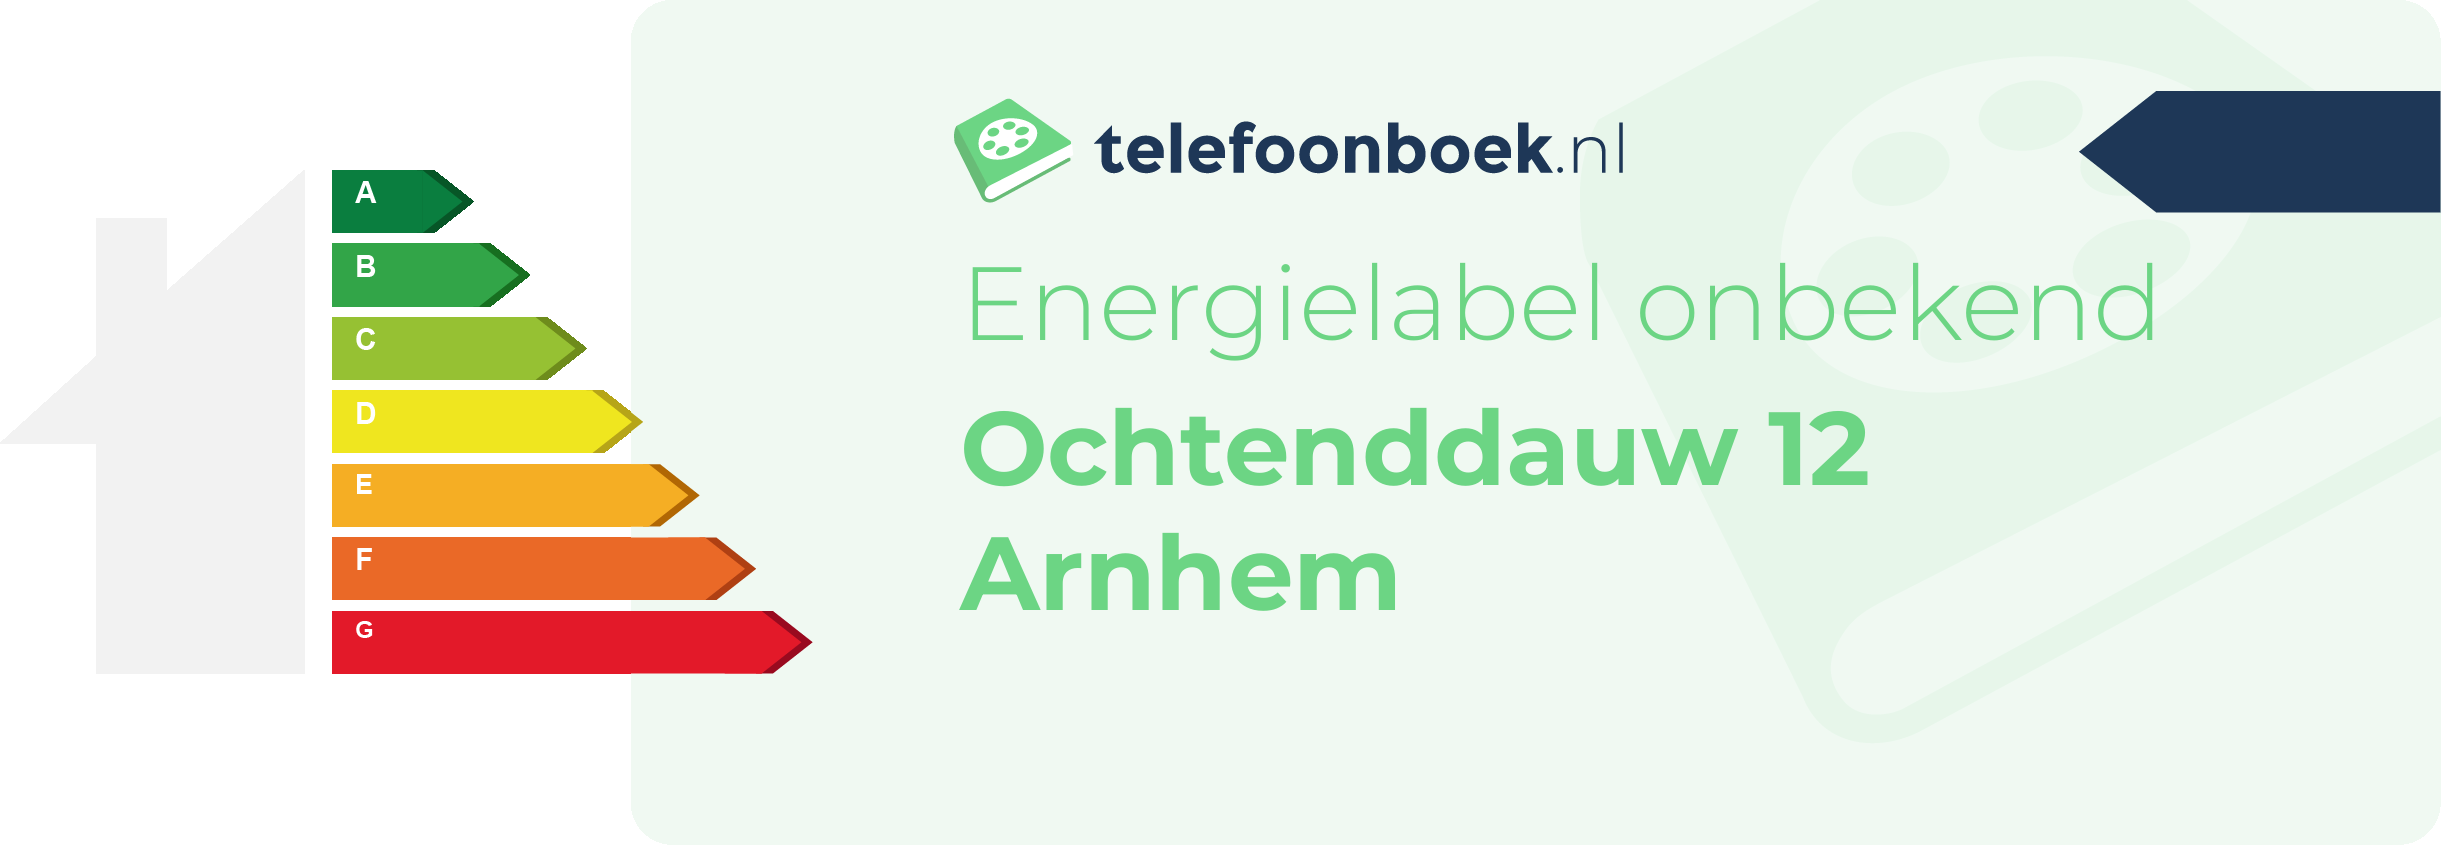 Energielabel Ochtenddauw 12 Arnhem